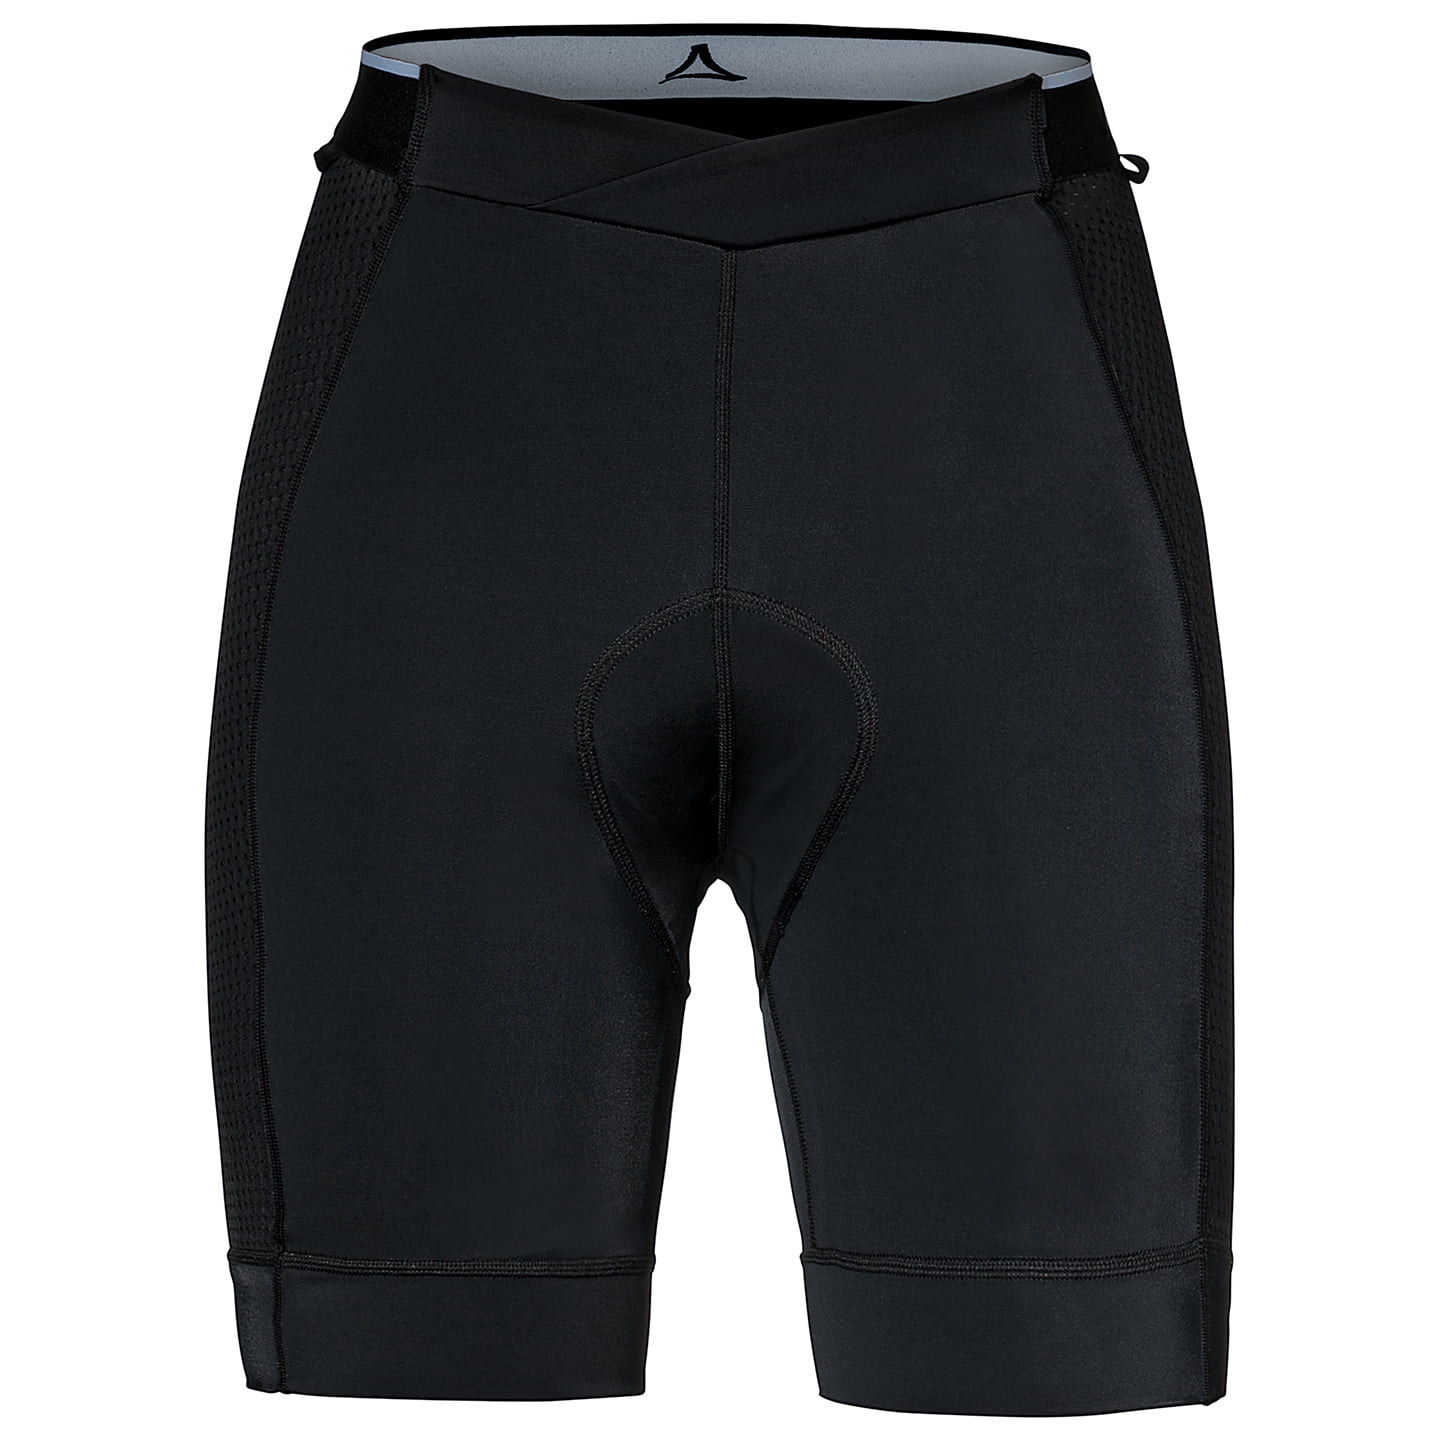 SCHOFFEL Skin Pants 4h Women’s Liner Shorts, size 40, Briefs, Cycling gear